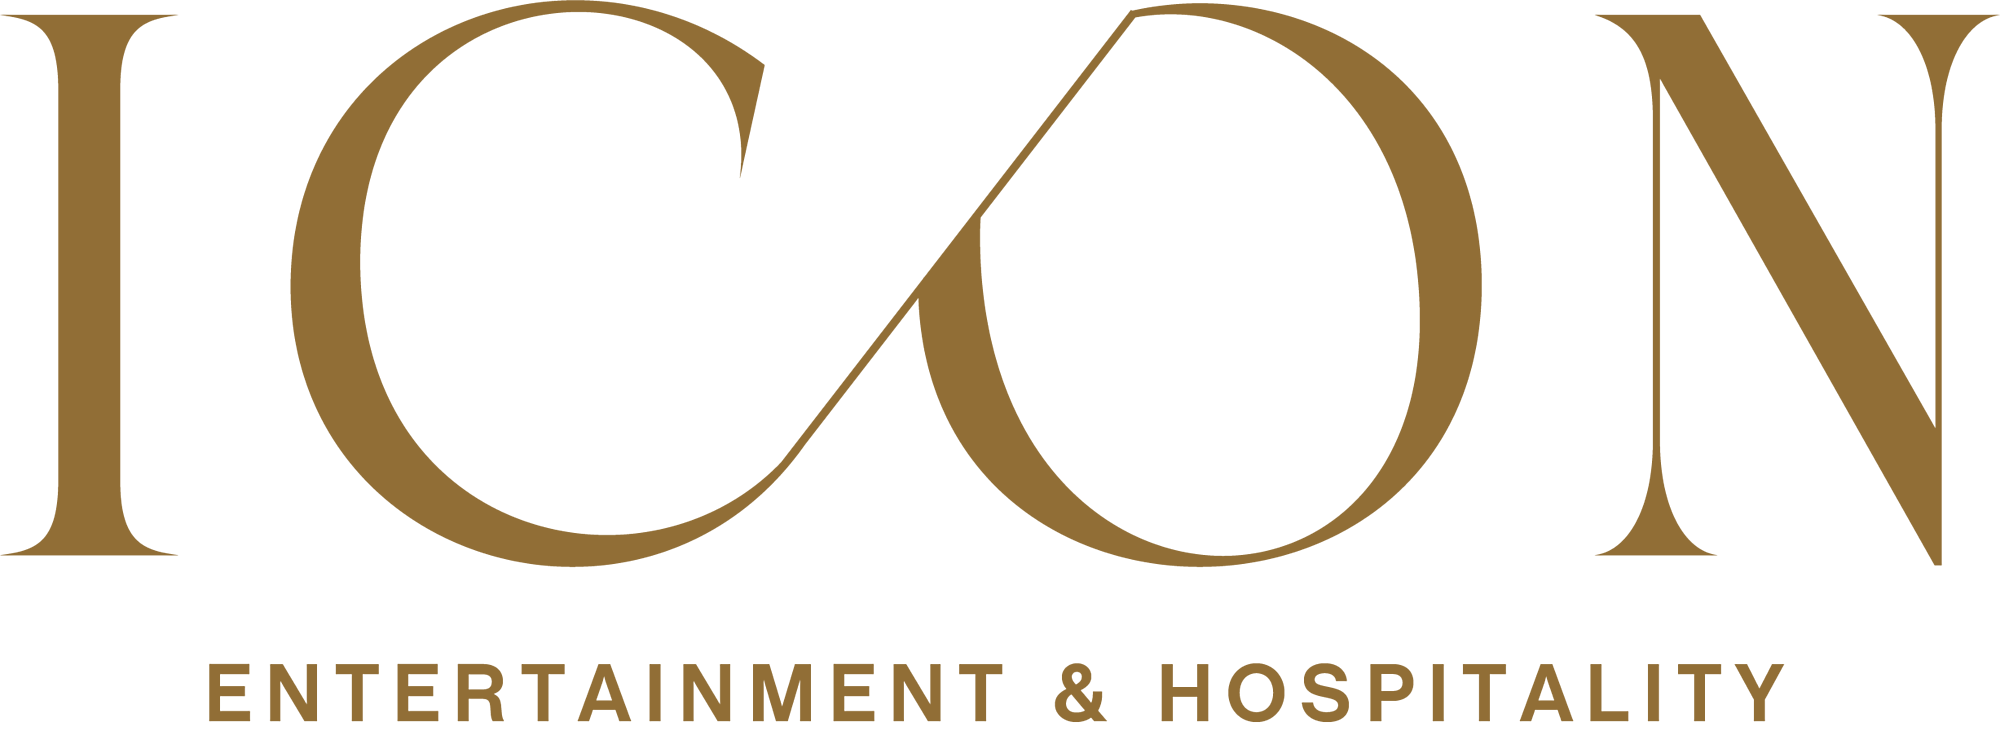  Nashville’s Icon Entertainment Group Rebrands As Icon Entertainment & Hospitality